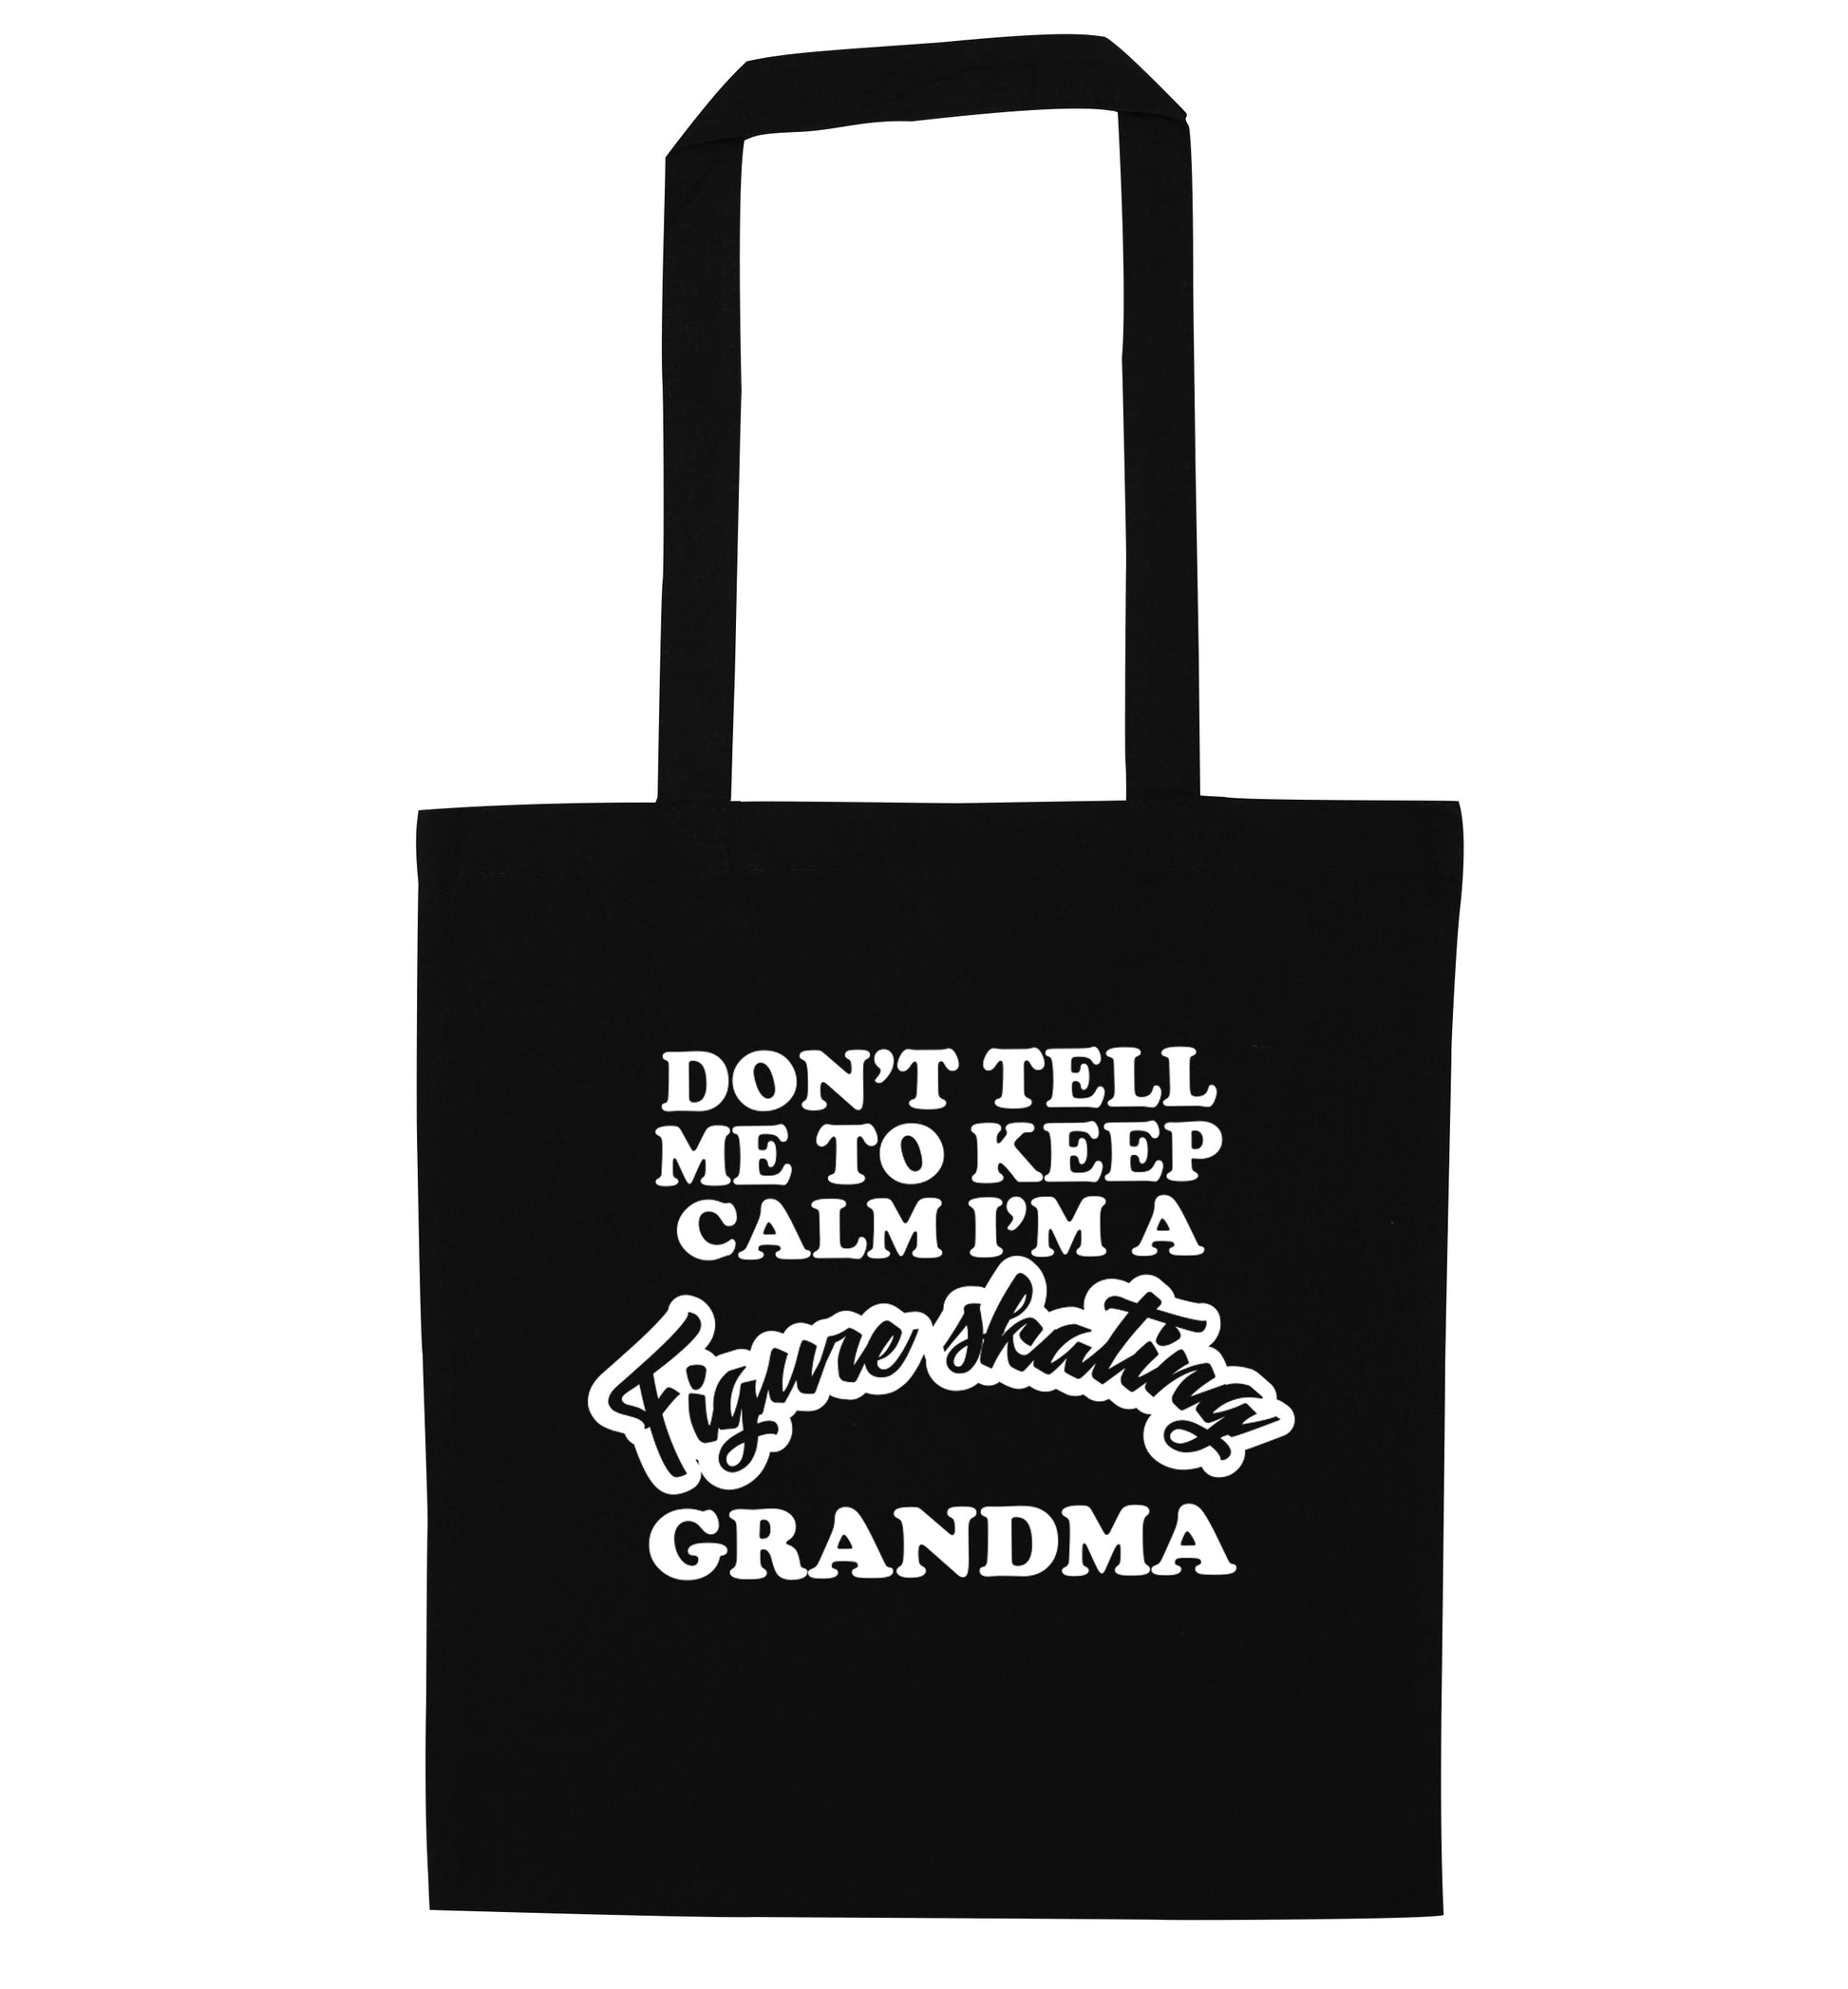 Don't tell me to keep calm I'm a figure skating grandma black tote bag